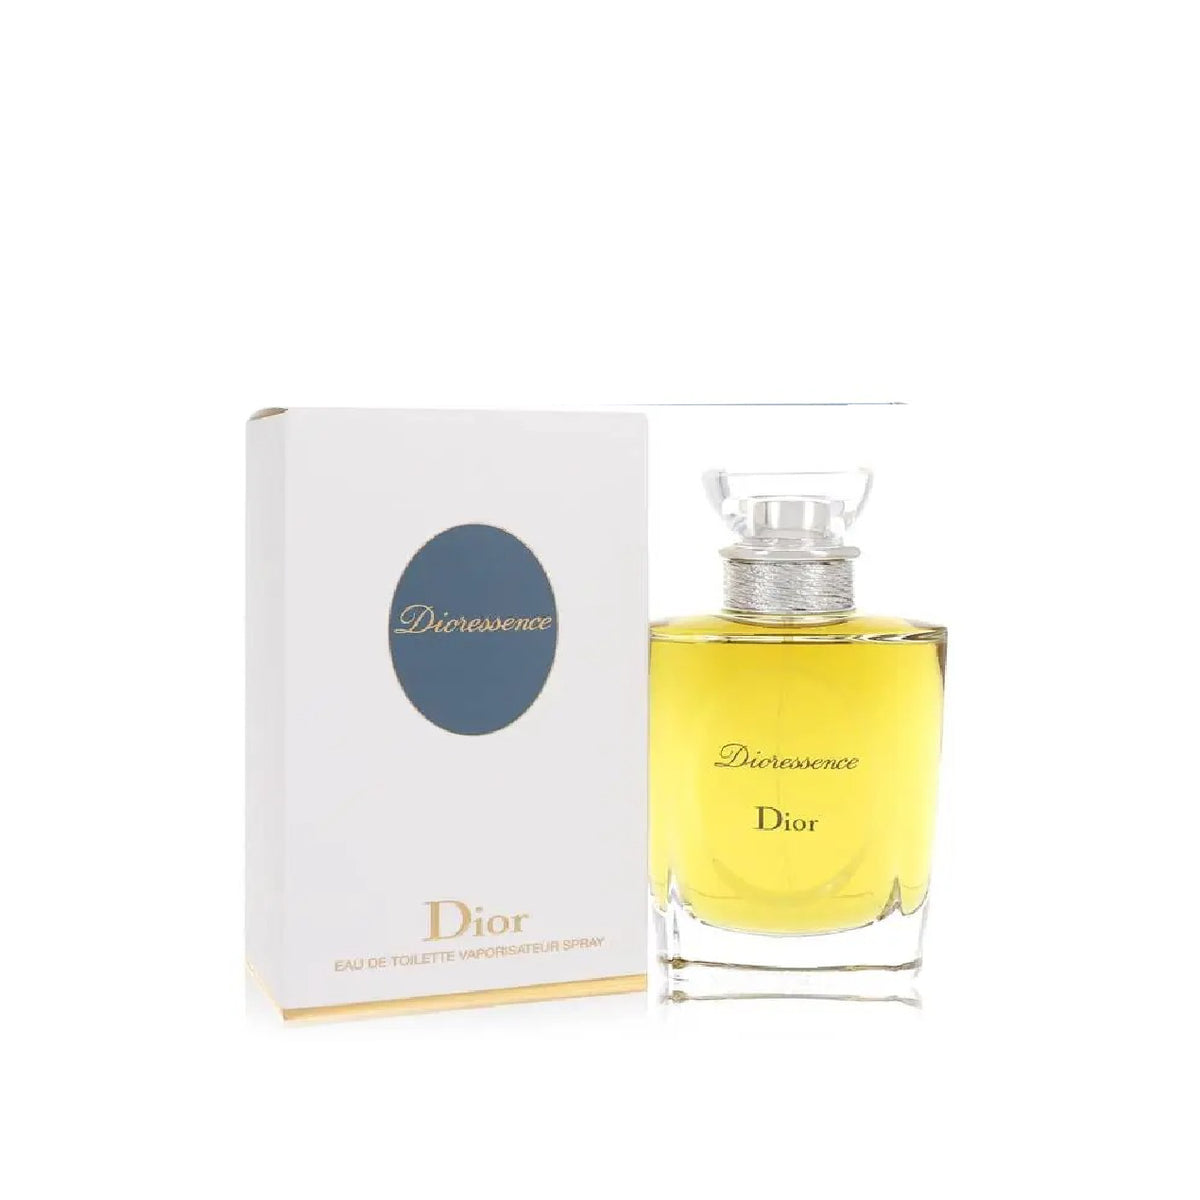 Dioressence Perfume for Women